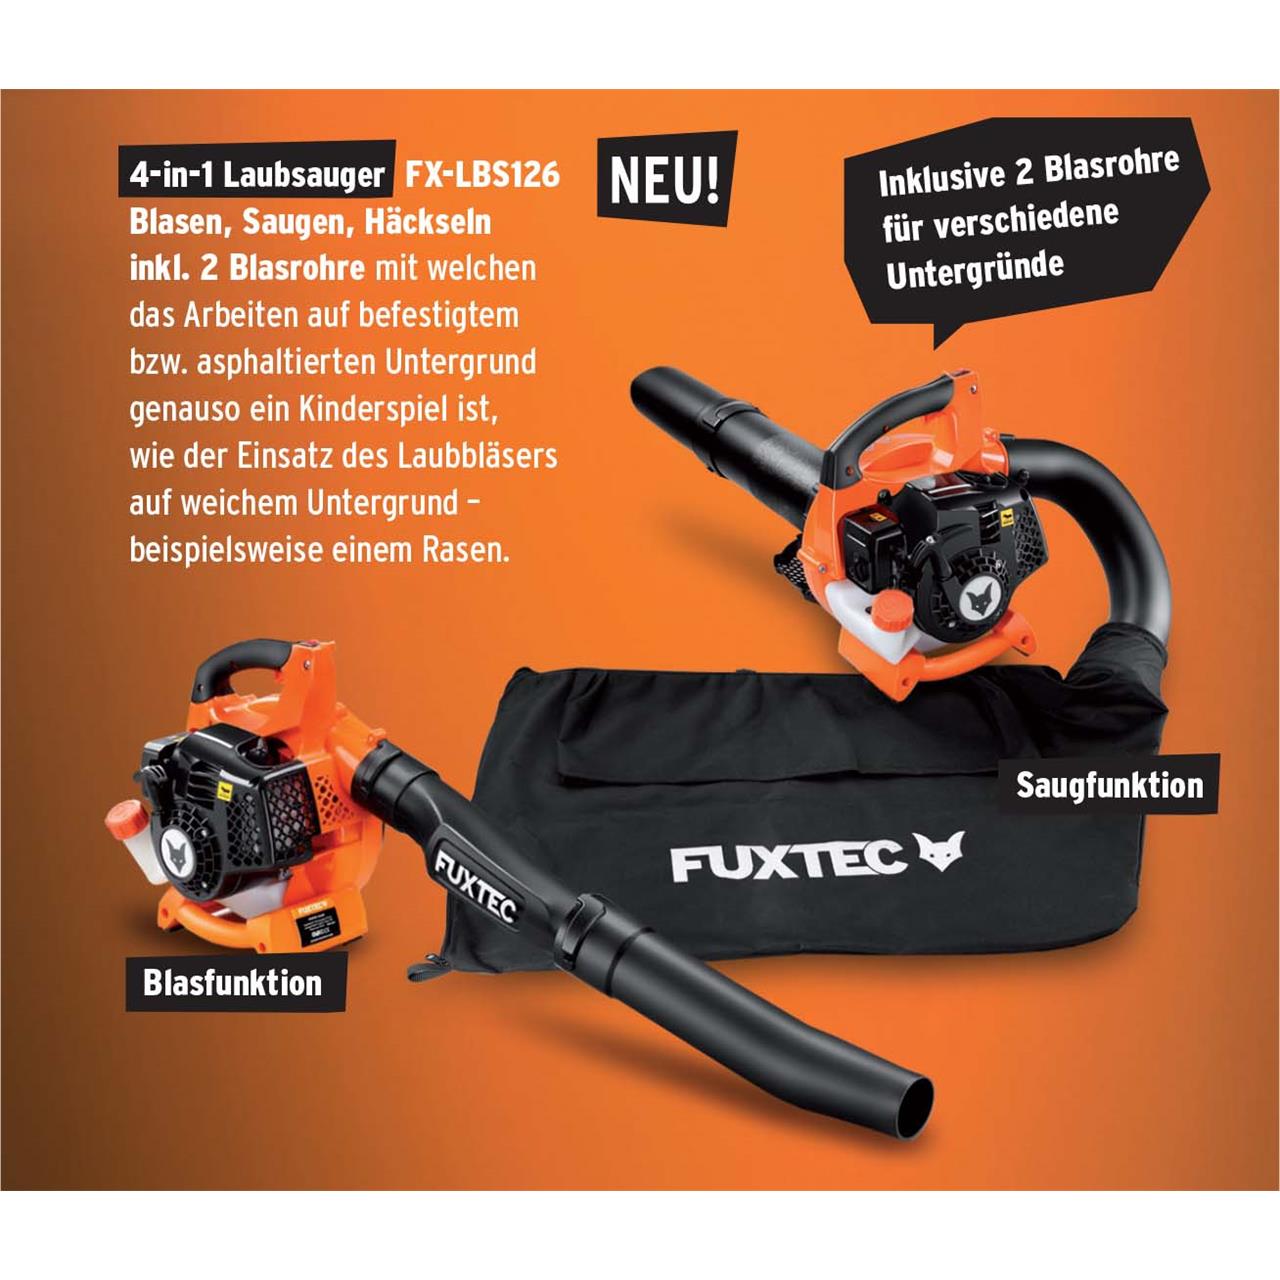 FUXTEC FX-LBS126 4in1 Laubsauger Laubbläser Laubhäcksler